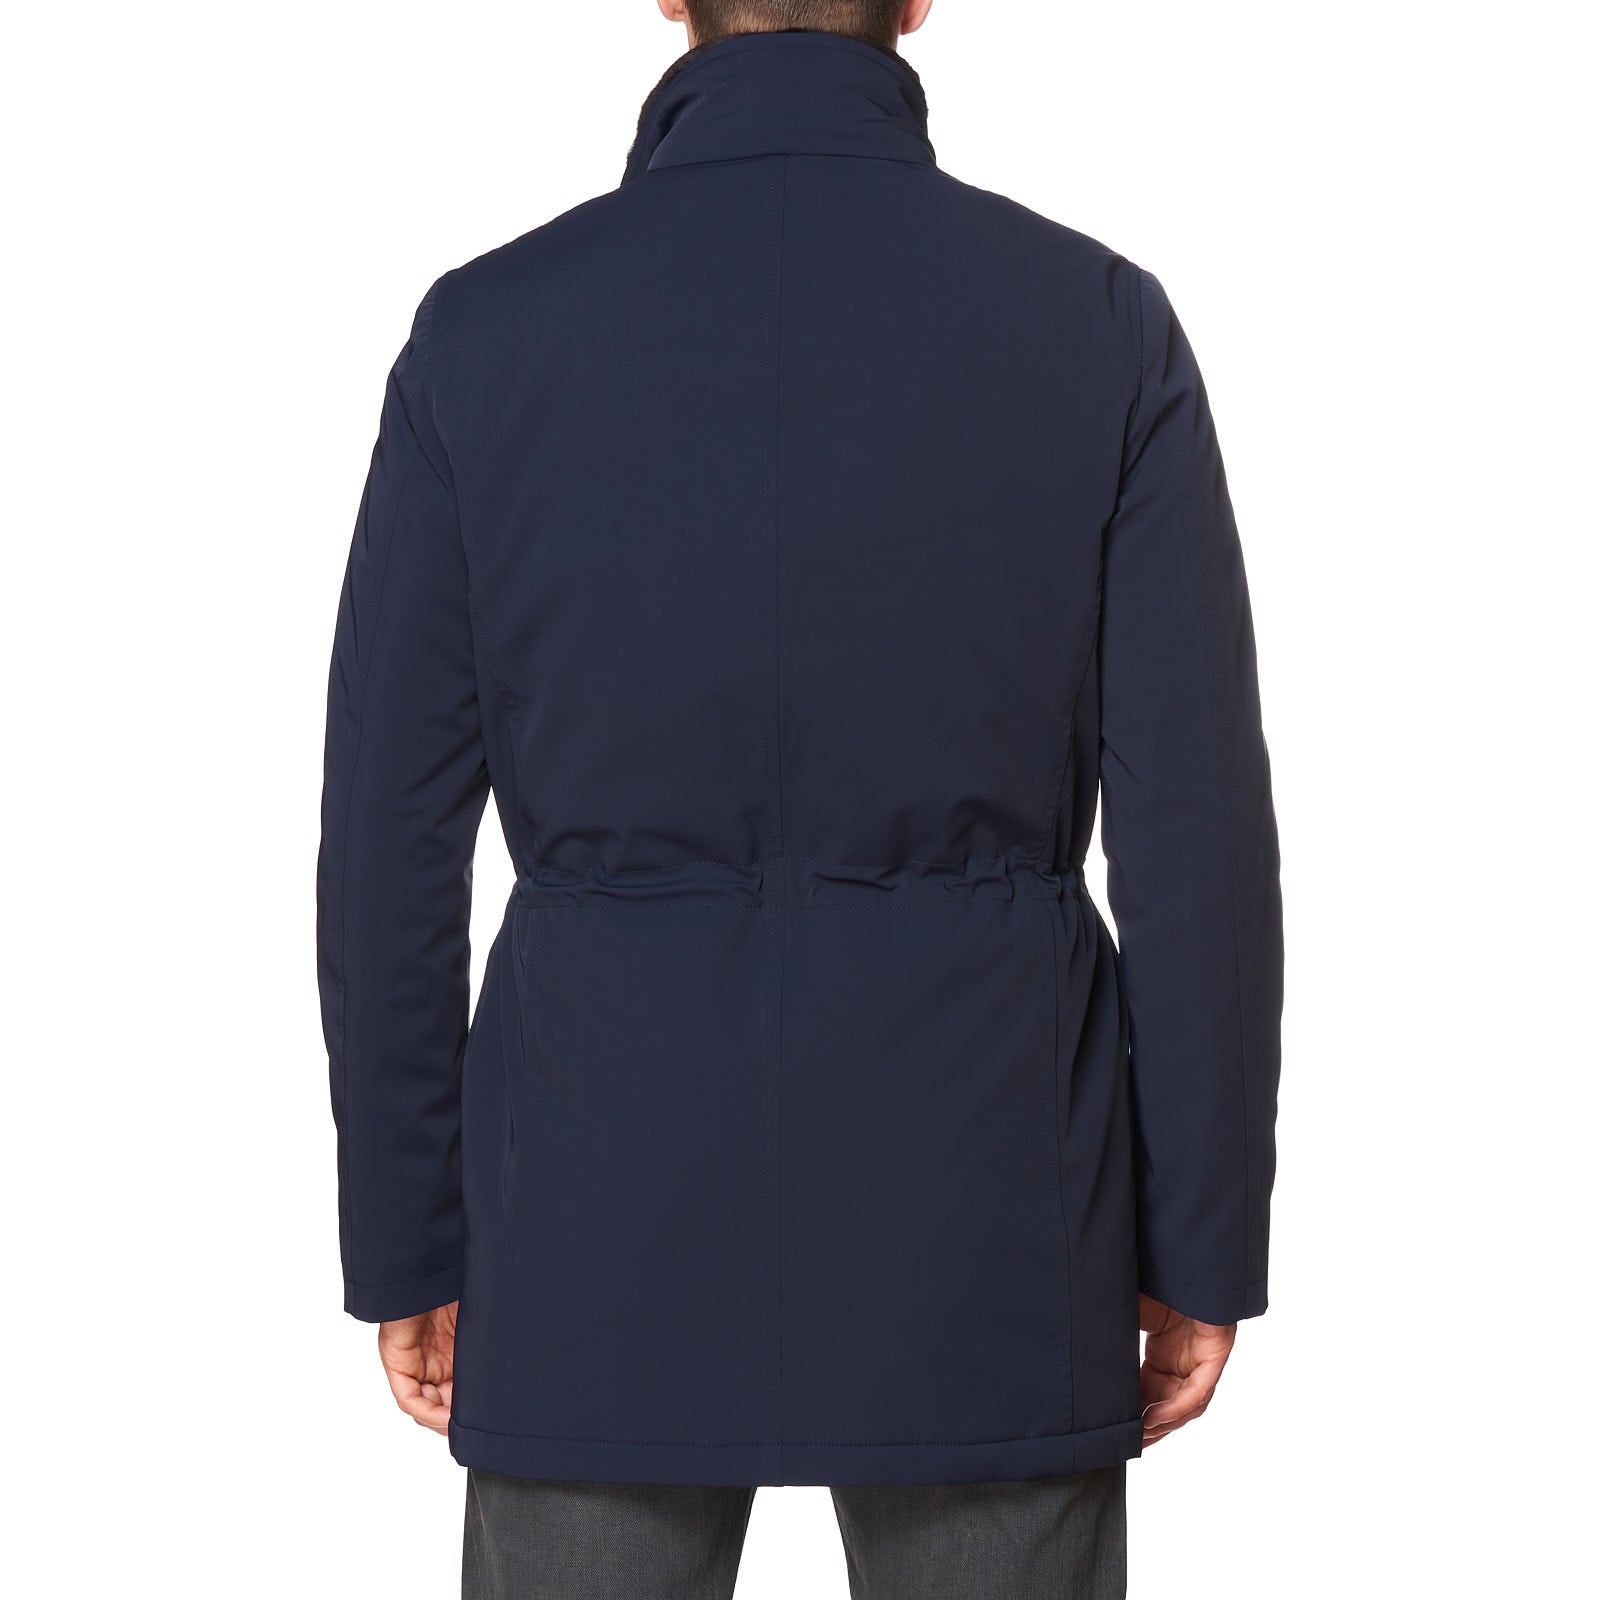 KITON KIRED "Pizzo" Navy Blue Padded Parka Jacket Coat Beaver Collar EU 50 US 40 KIRED